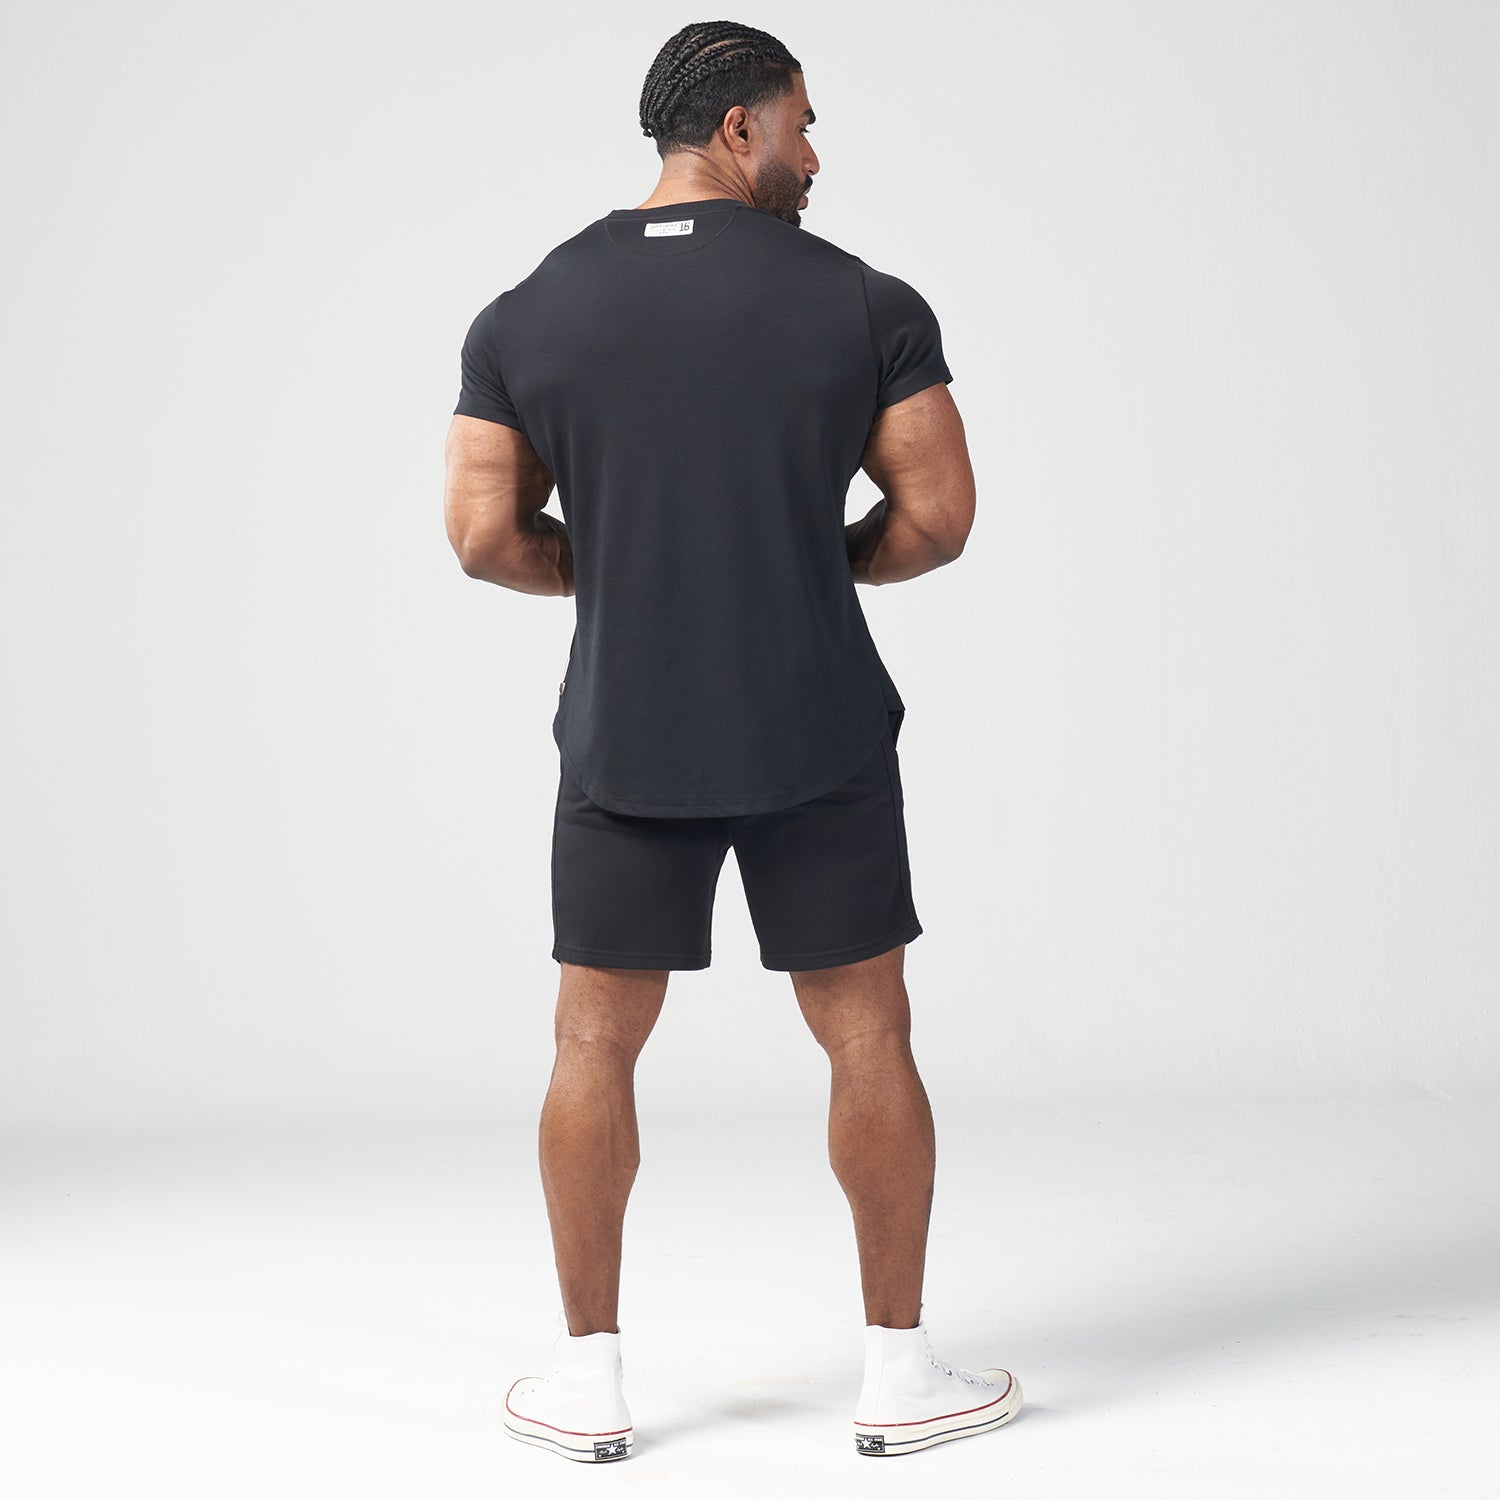 squatwolf-gym-wear-golden-era-retro-muscle-tee-black-workout-shirts-for-men